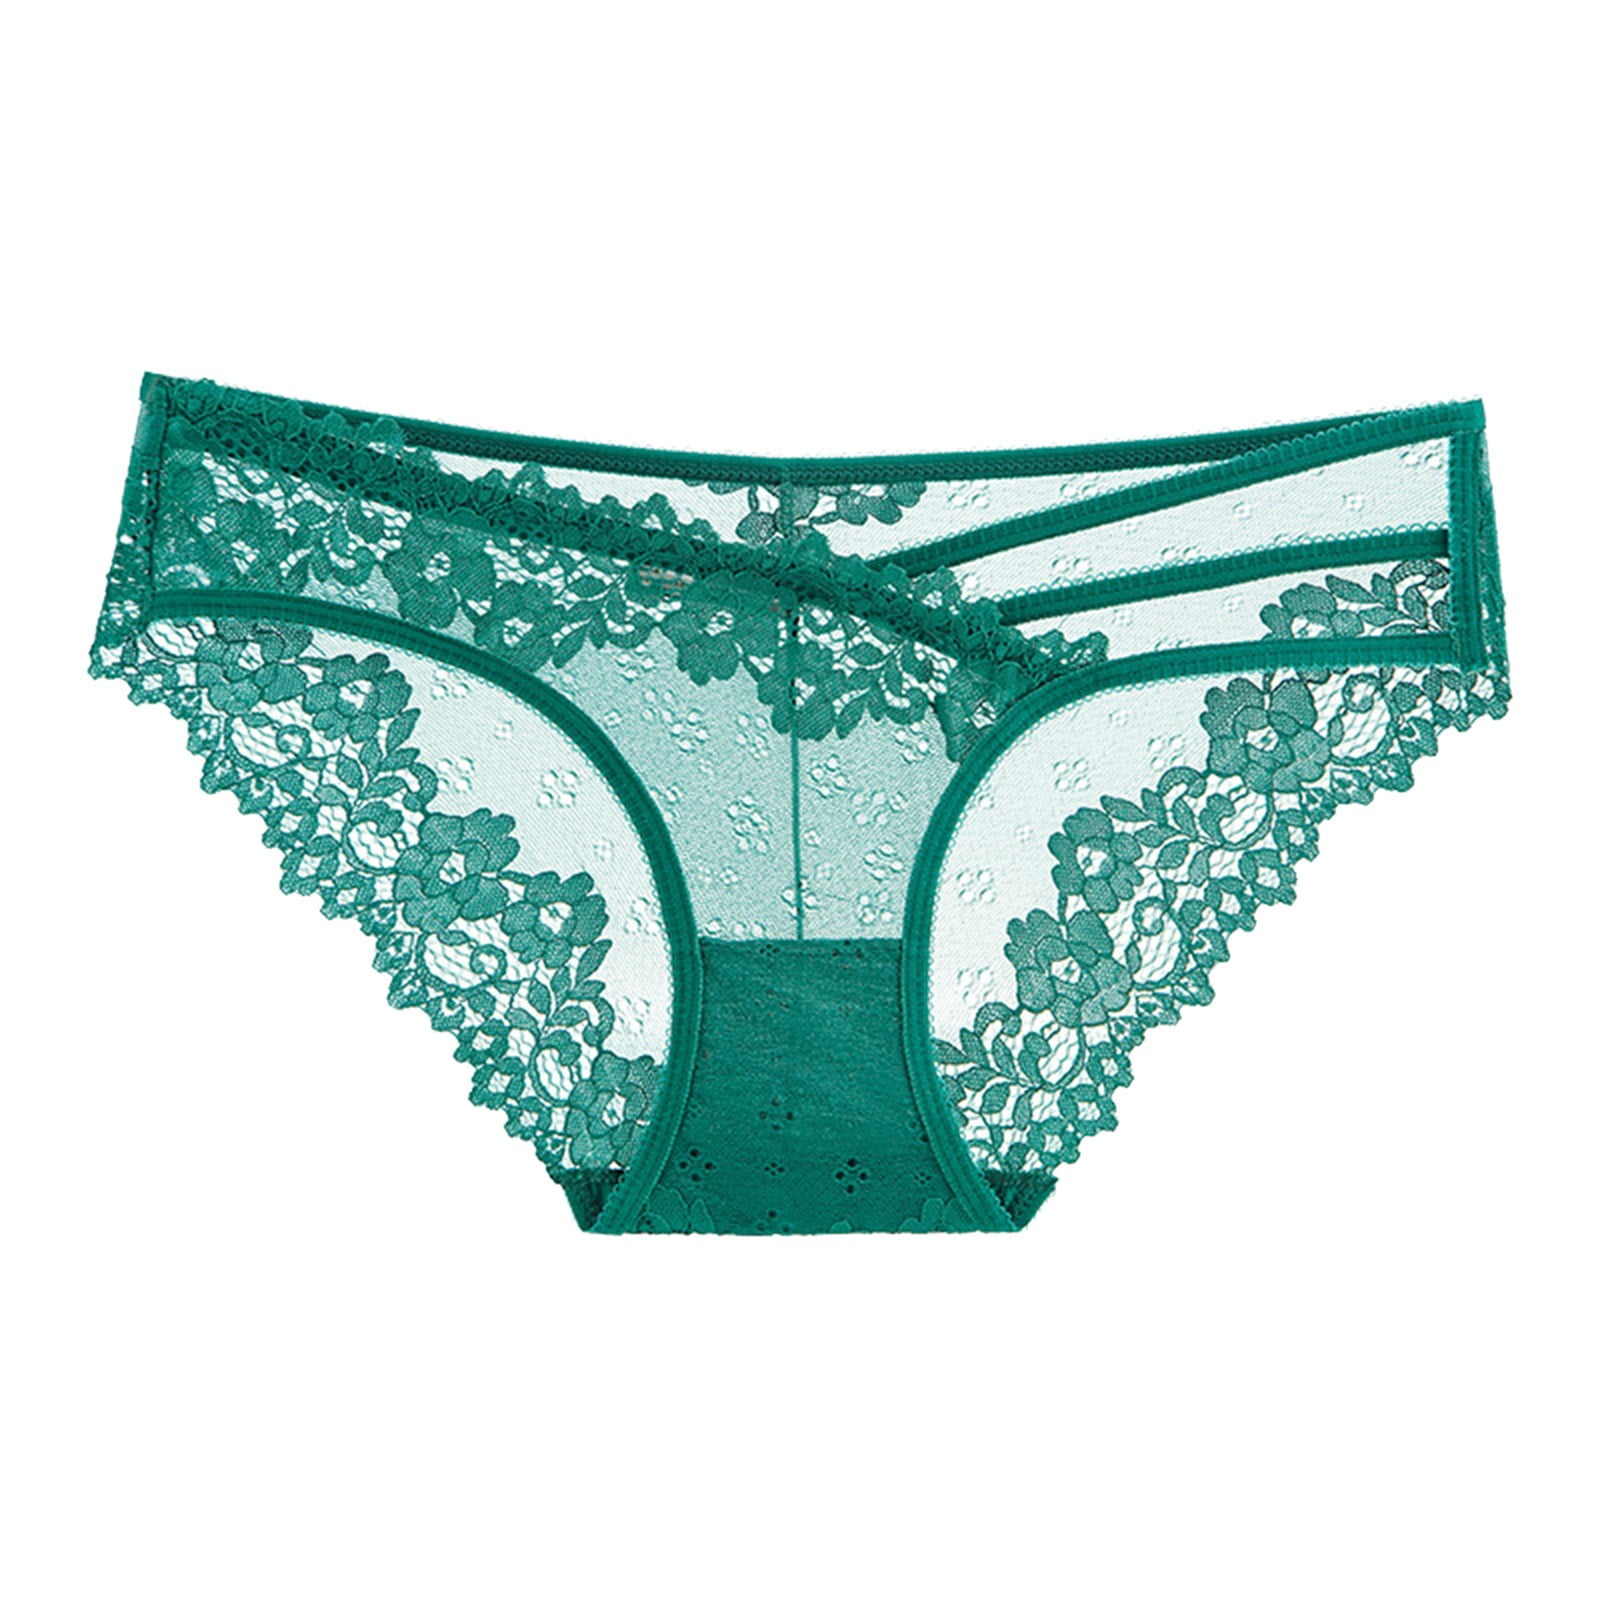 3 Pack floral seamfree boyleg panties green - WOMEN's Panties